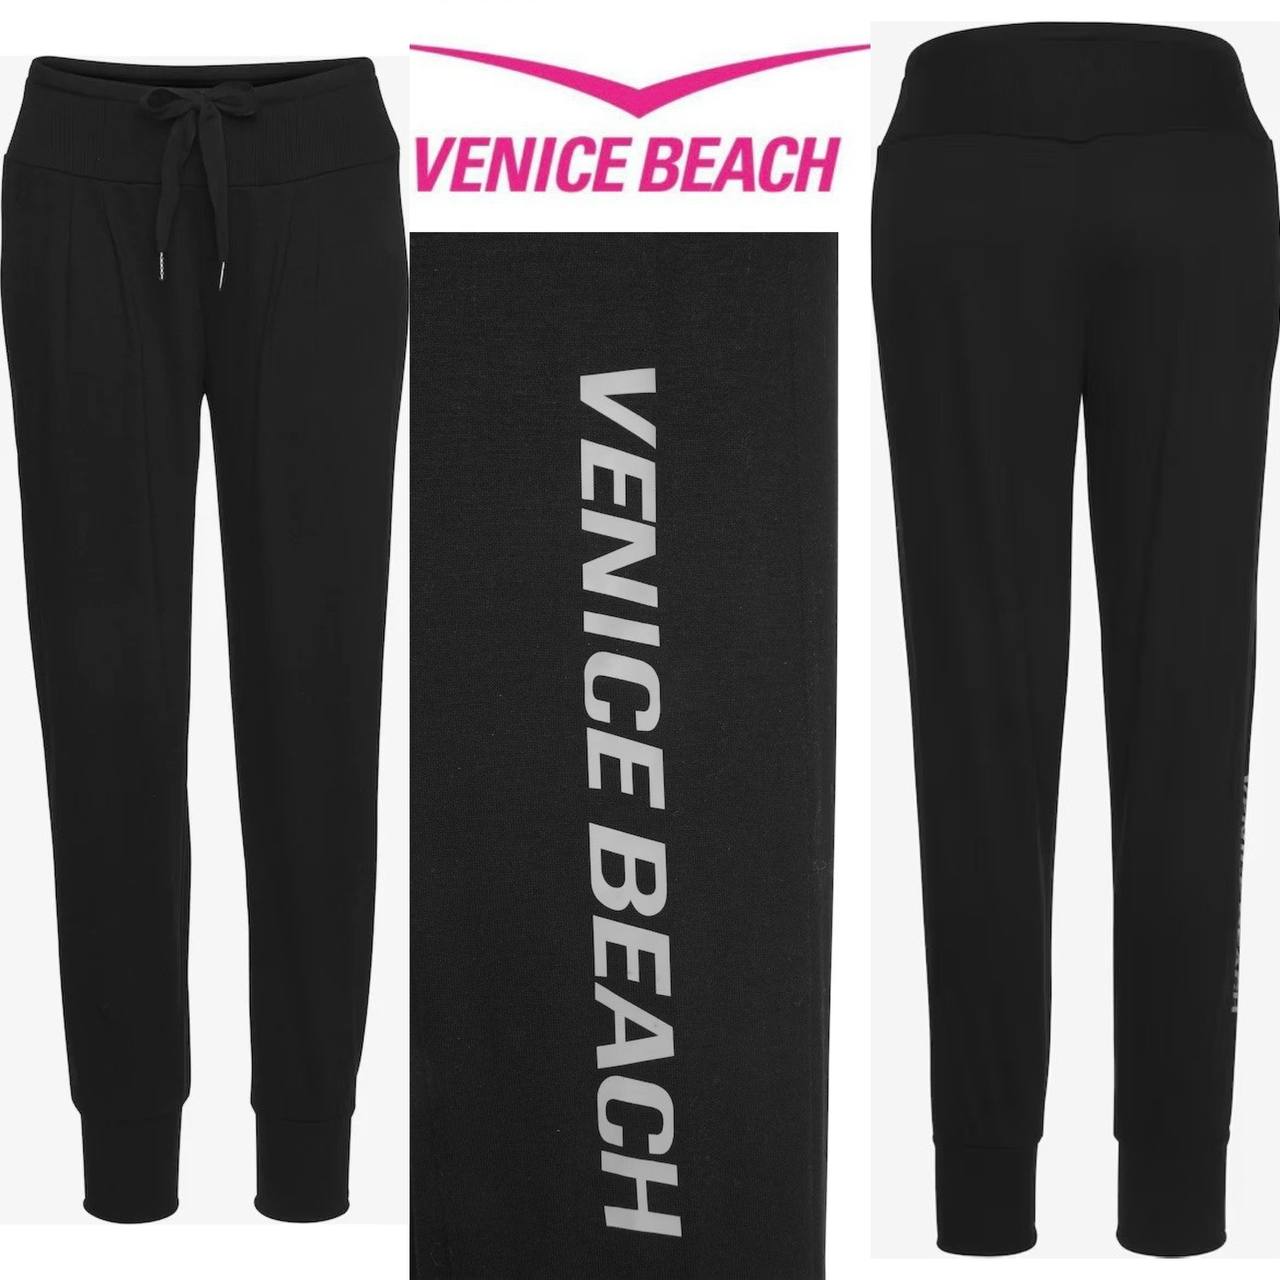 Venice Beach women's sports trousers